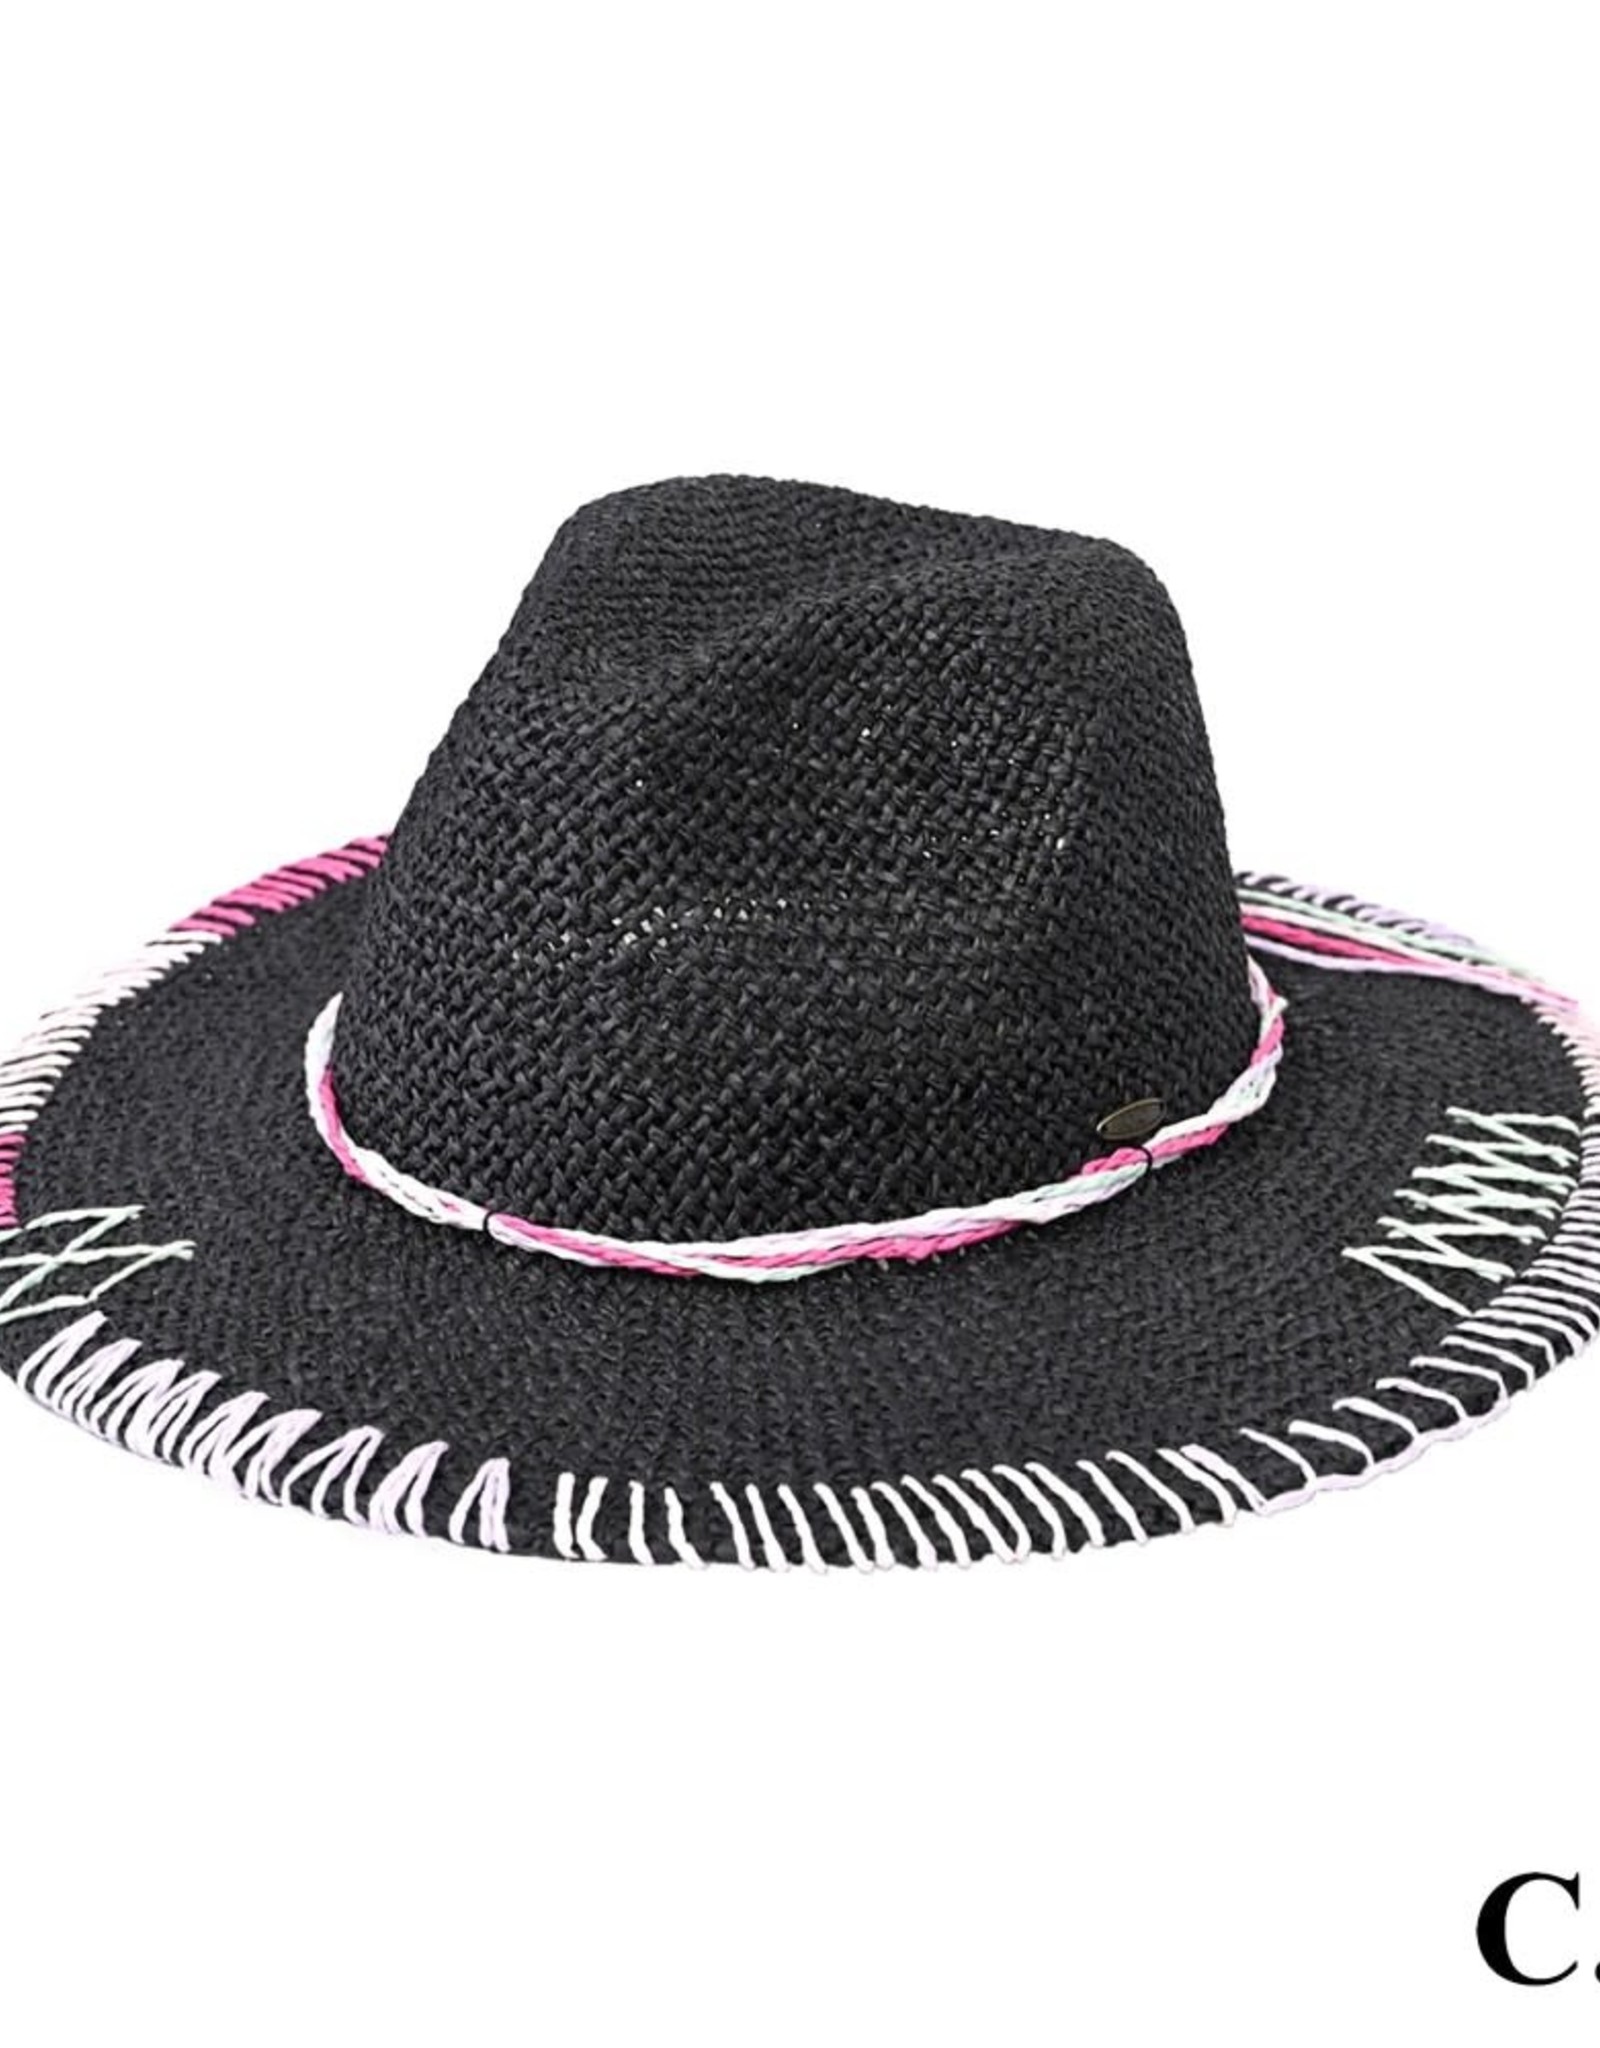 judson 729208 - C.C MultiColor Decorative Stitch Panama Hat Featuring Handmade Paper Stitches - Black